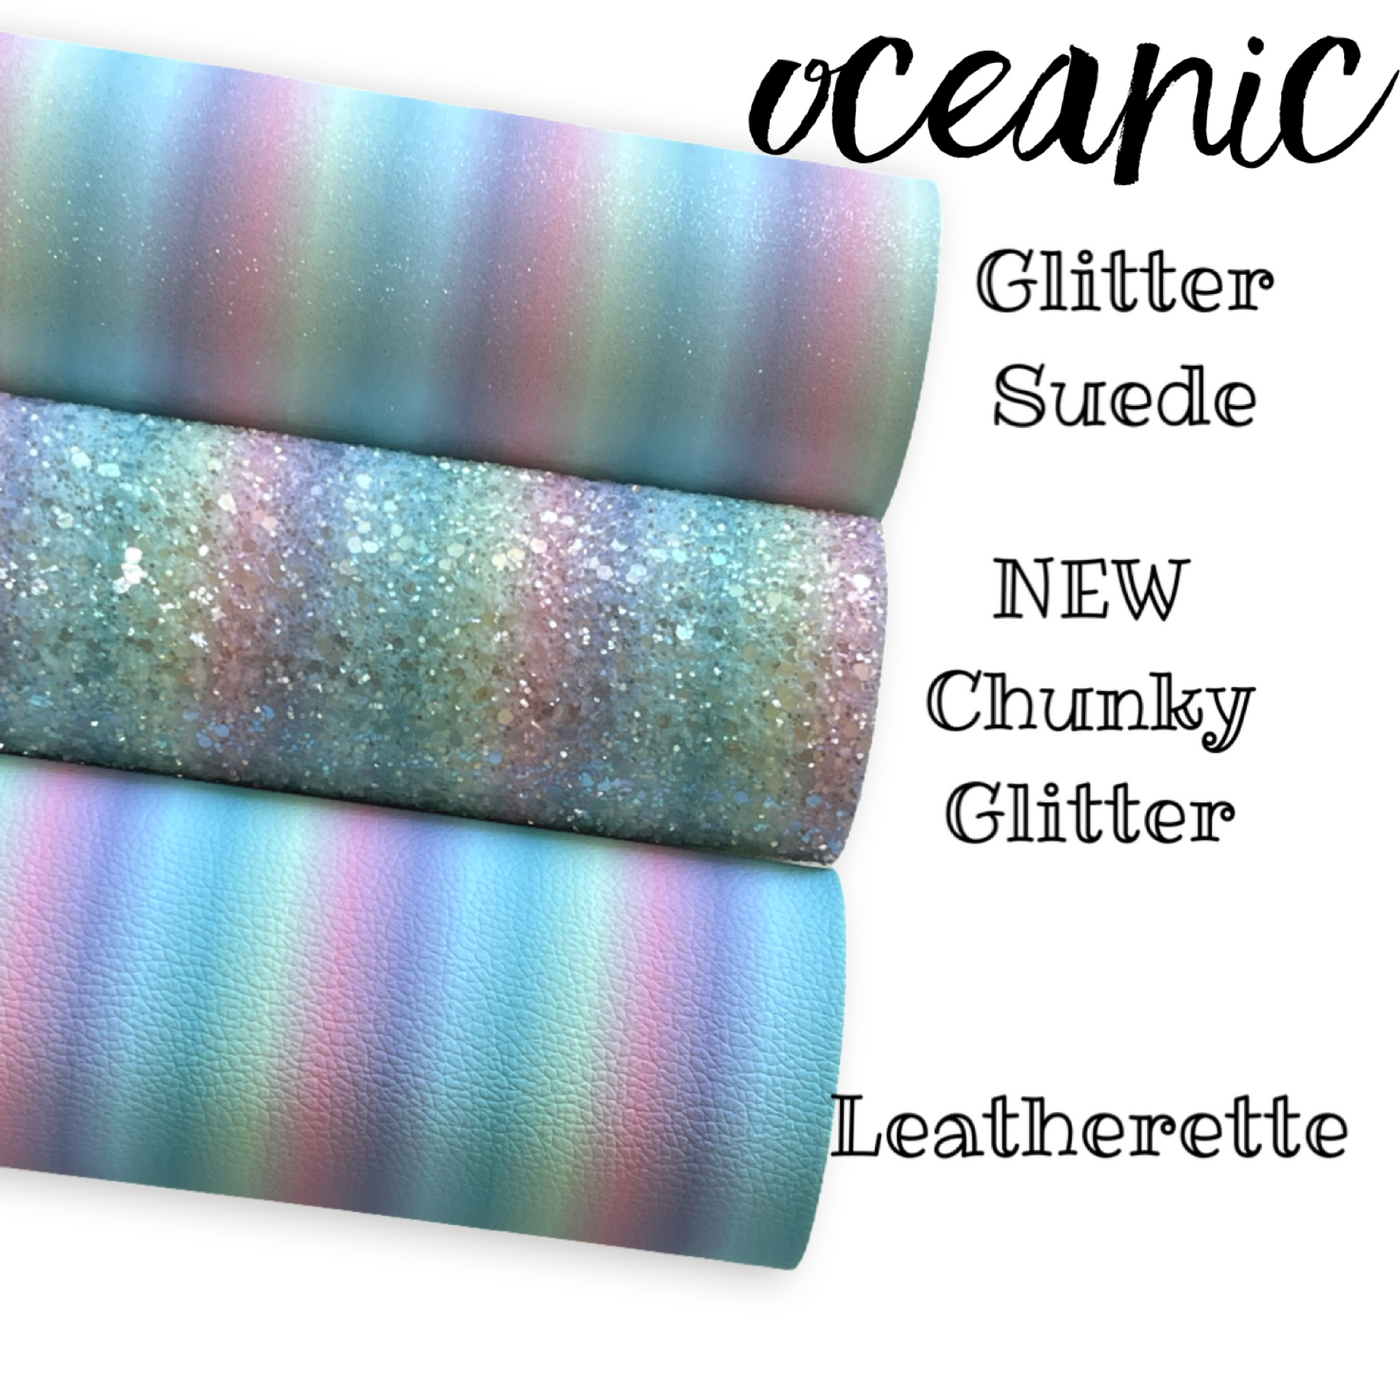 Oceanic Ombré Glitter Suede Leatherette